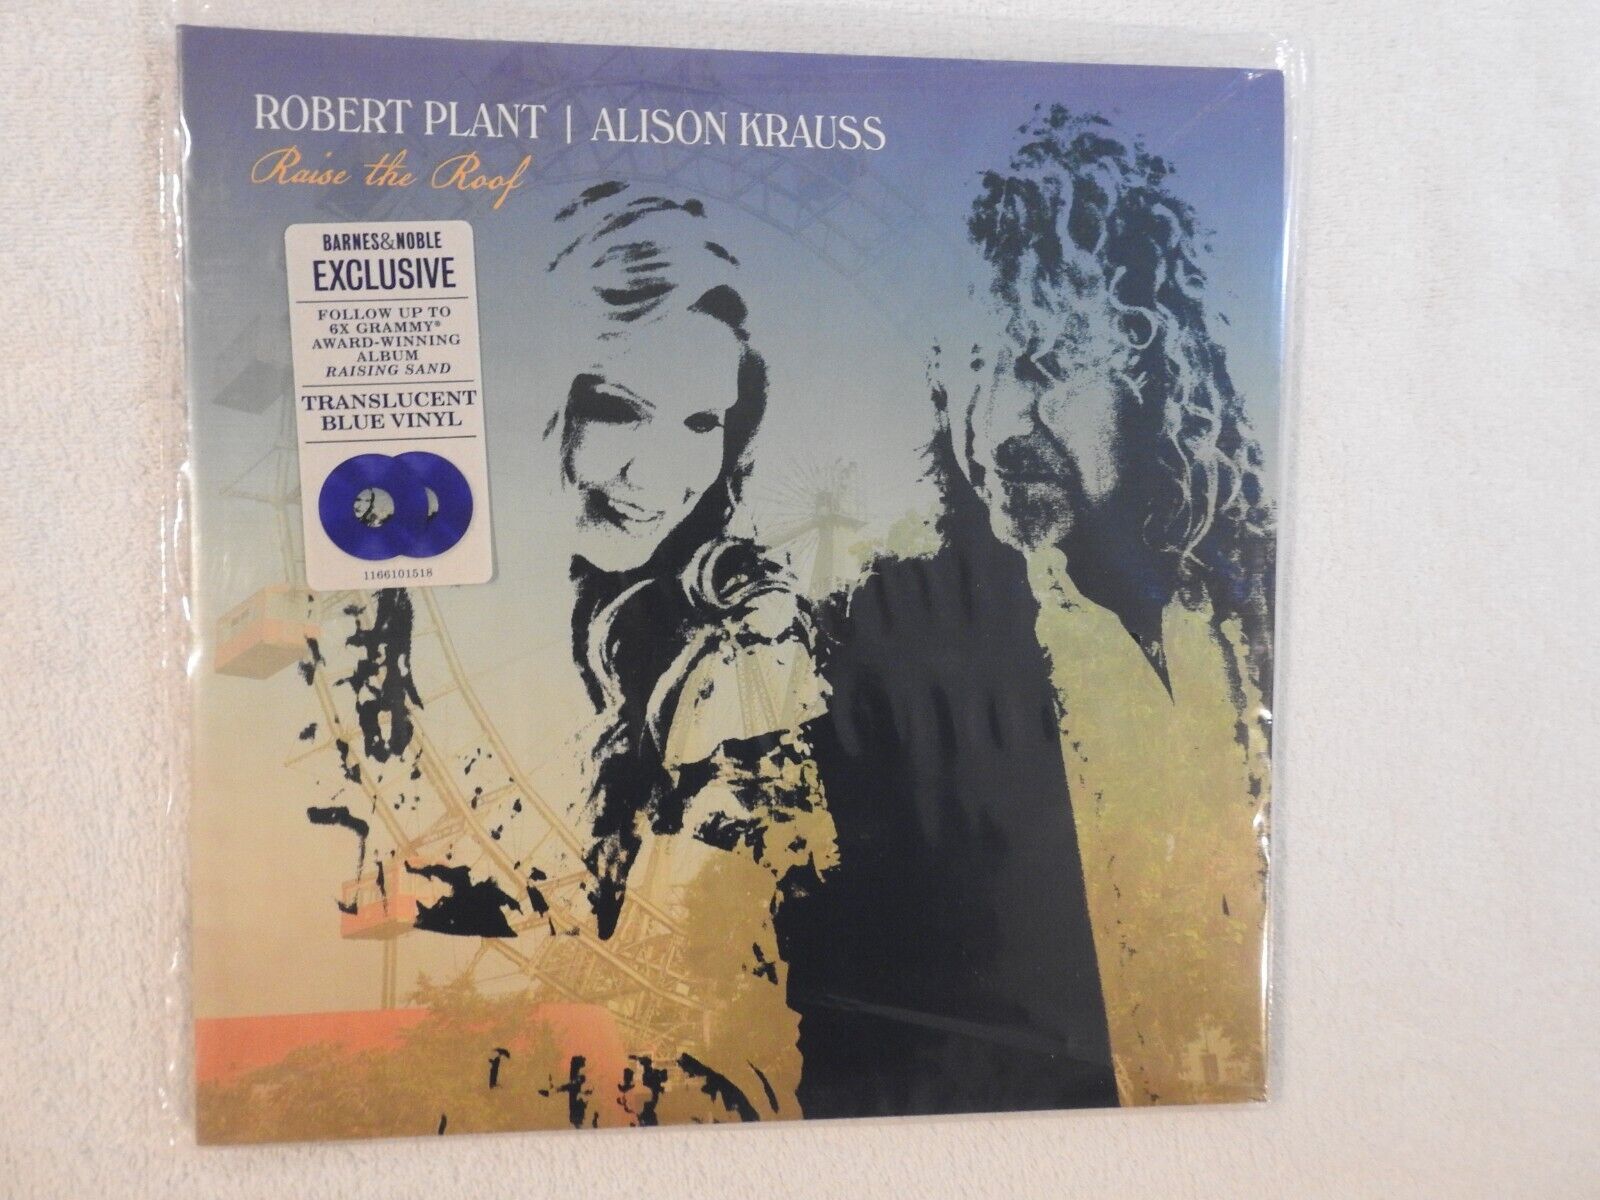 Robert Plant Alison Krauss "Raise The Roof" BRAND NEW 2 TRANSLUCENT BLUE VINYL!